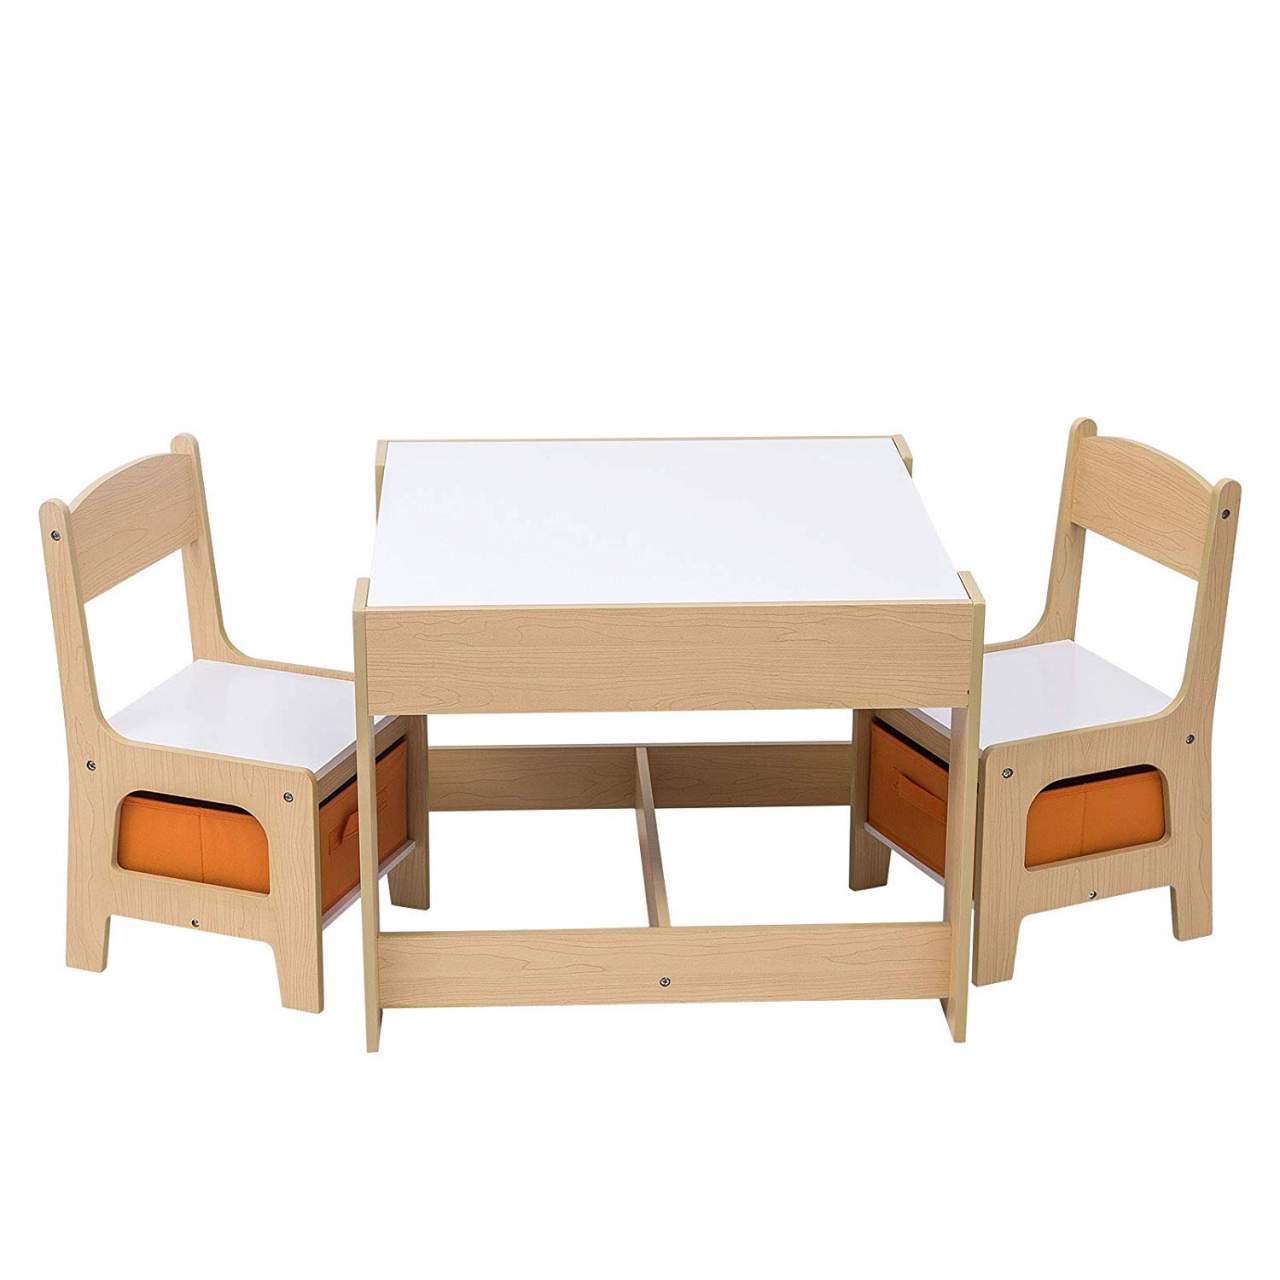 3-tlg Kindersitzgruppe Sitzgarnitur Kinder Tisch Kinderstuhl Kindermöbel NEU